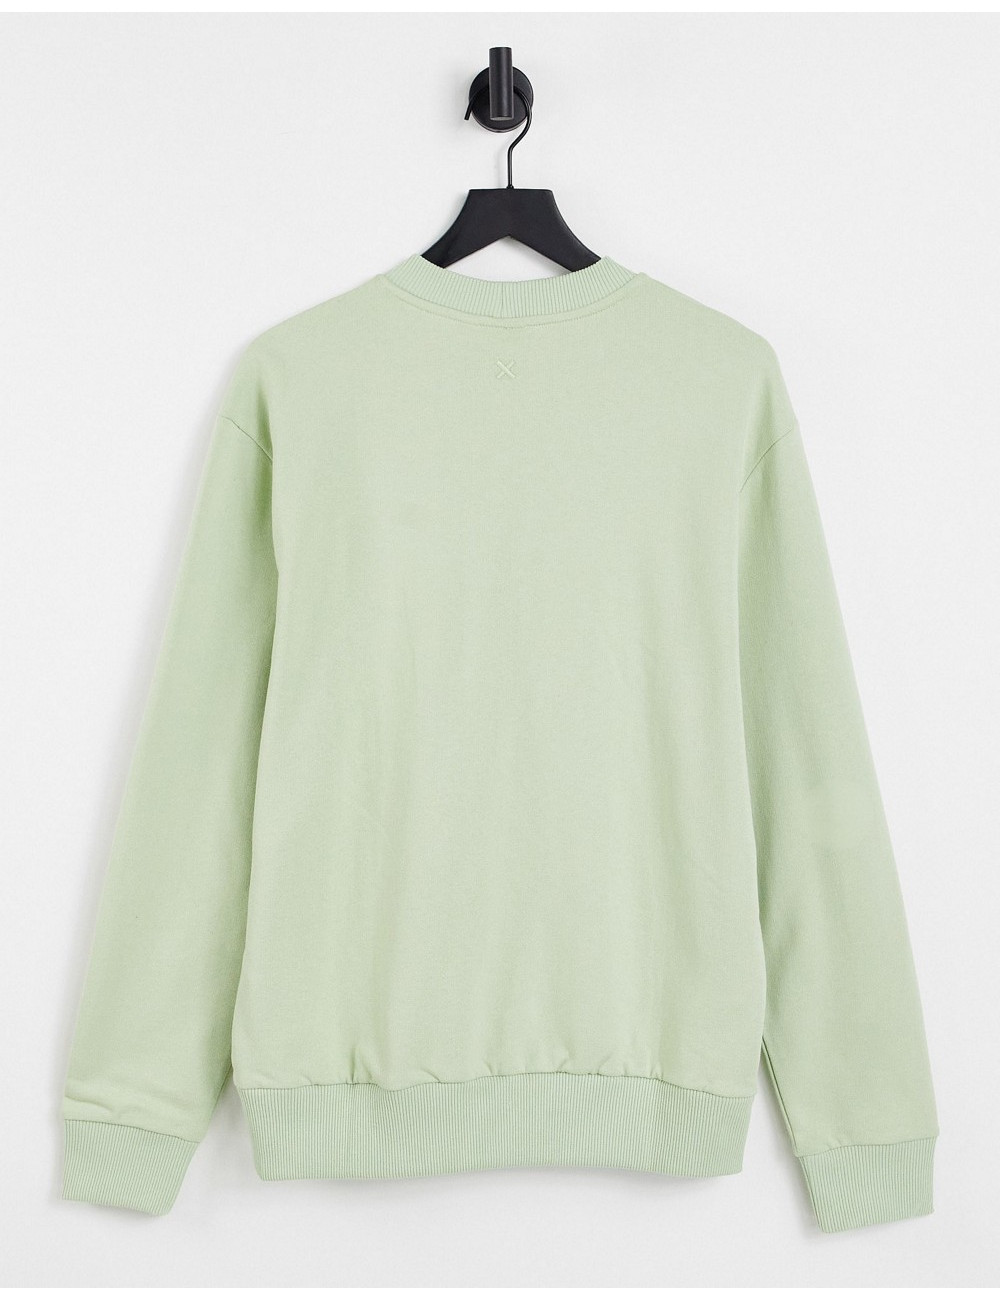 COLLUSION sweatshirt in green